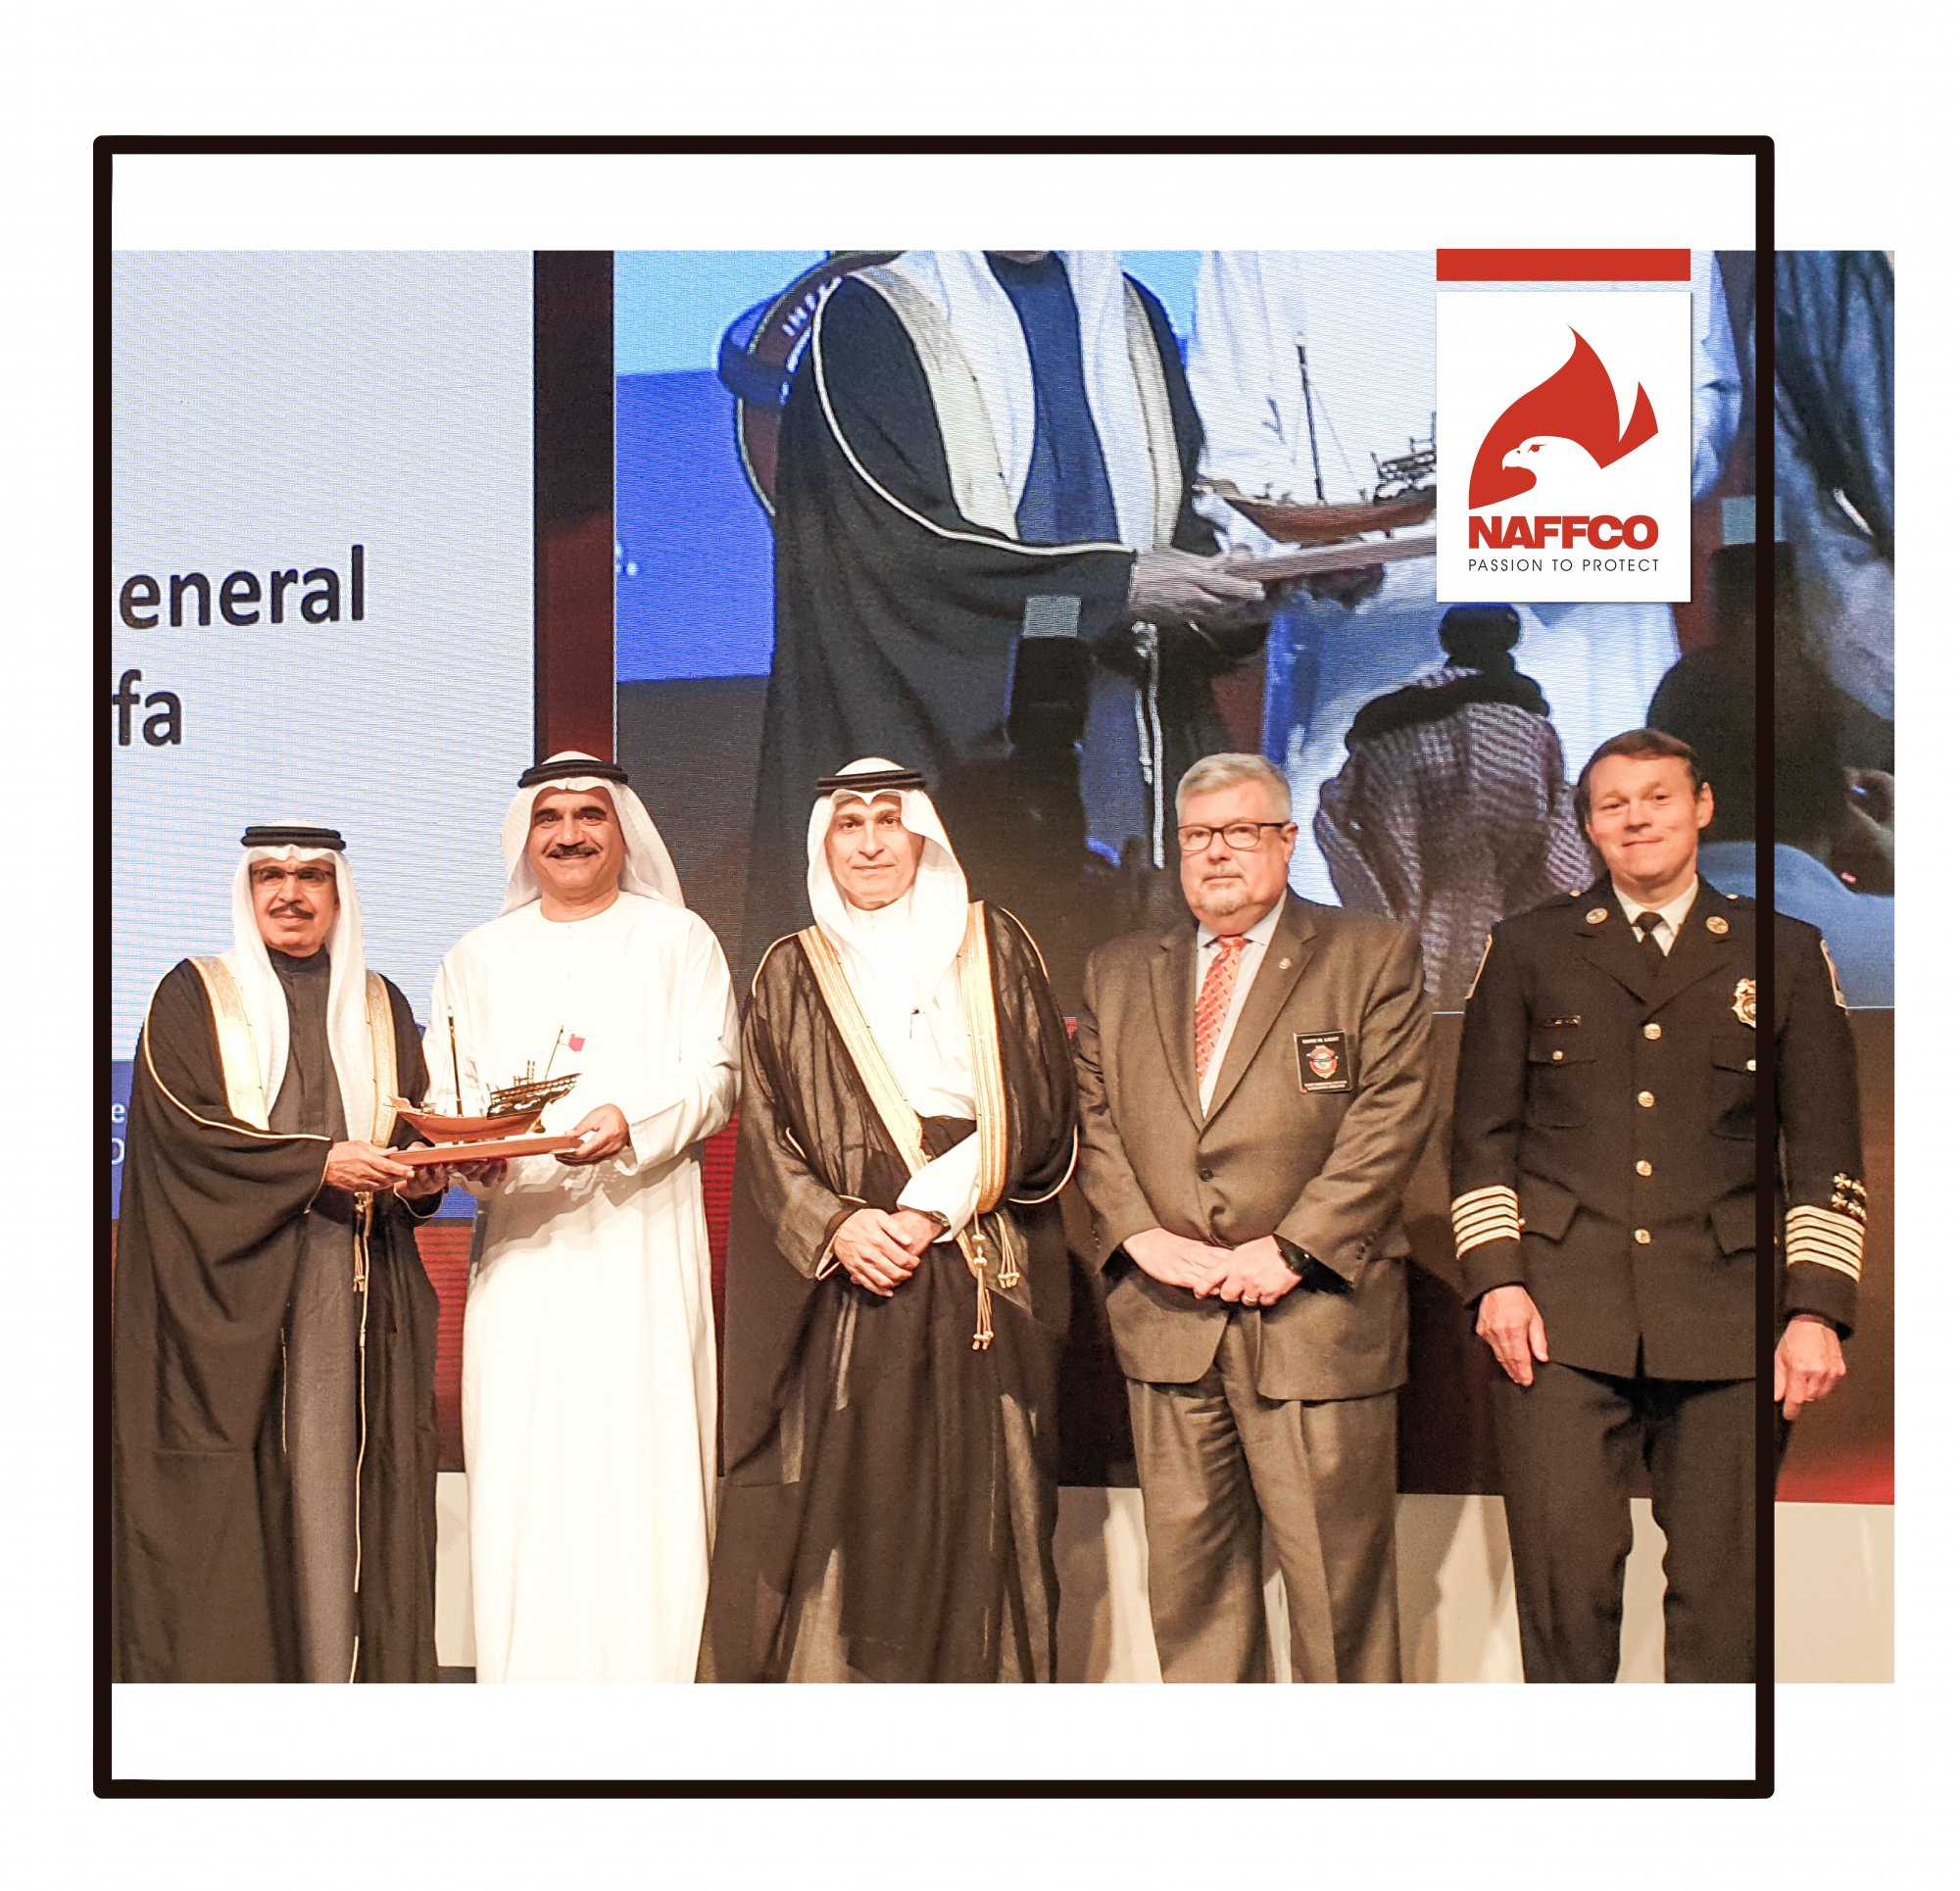 NAFFCO Group CEO Eng. Khalid Al Khatib receiving Award from Lt. Gen Shaikh Rashid bin Abdulla Al Khalifa